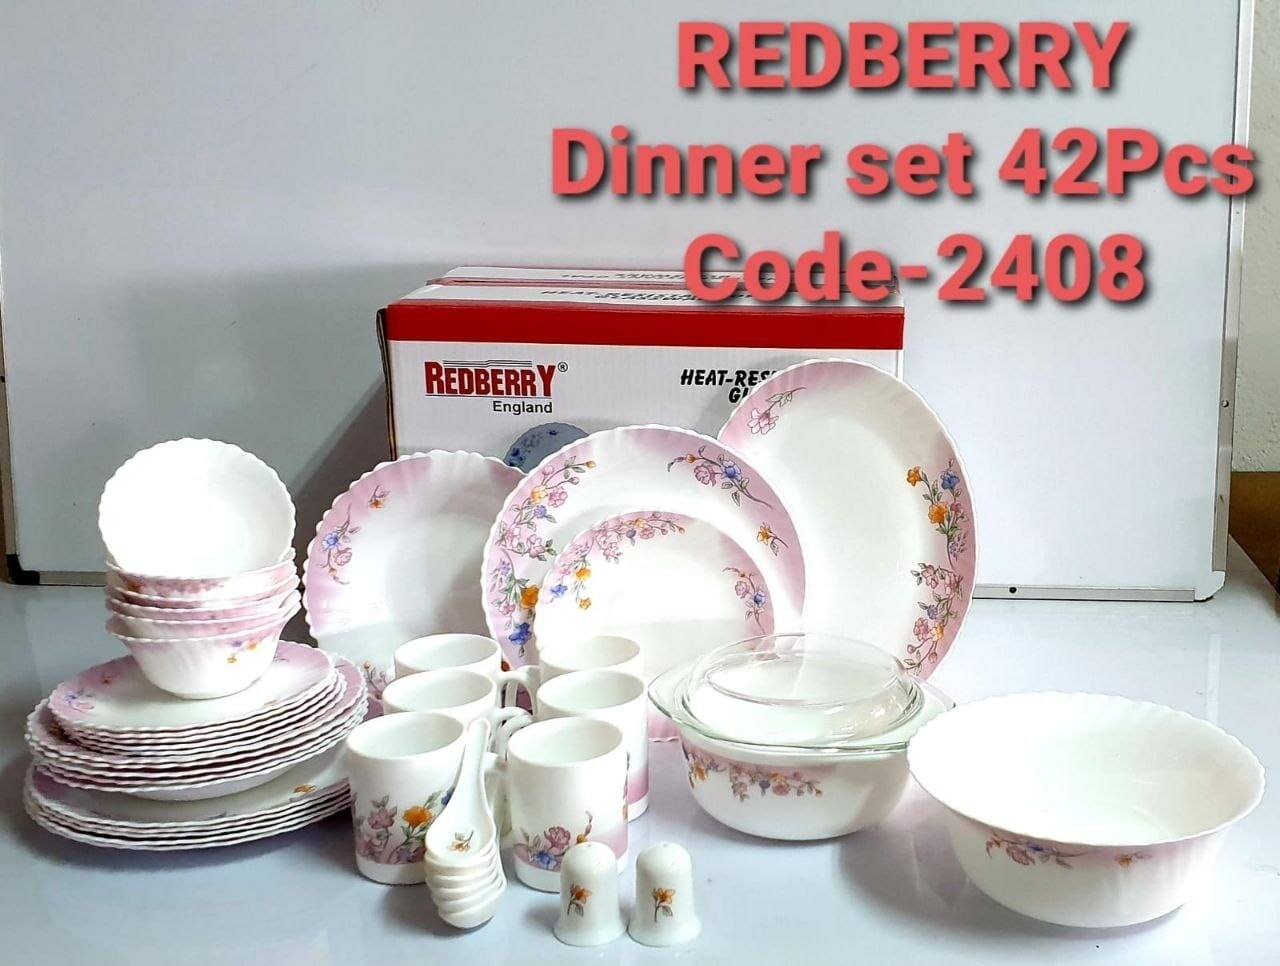 Redberry 42pcs dinner set no. 2408